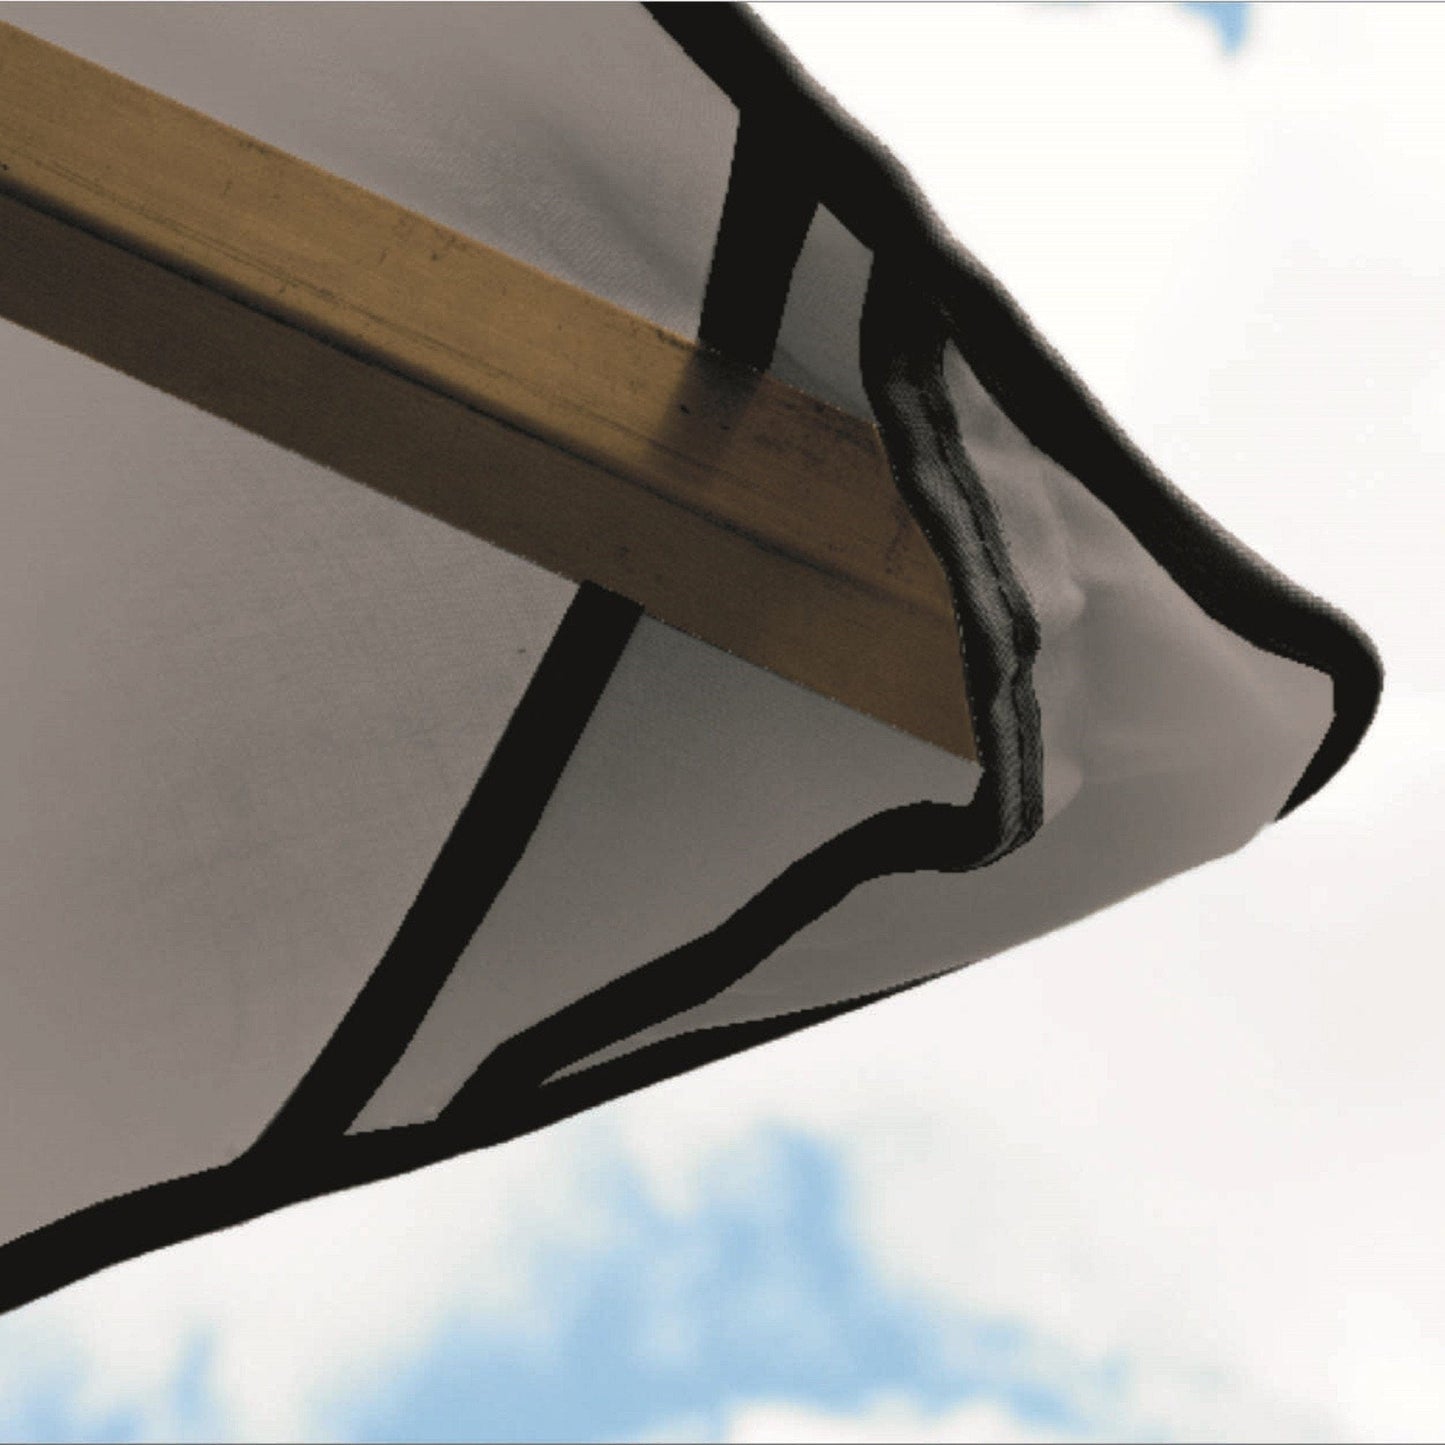 Riverstone | SunDURA Replacement Canopy for ACACIA Gazebo